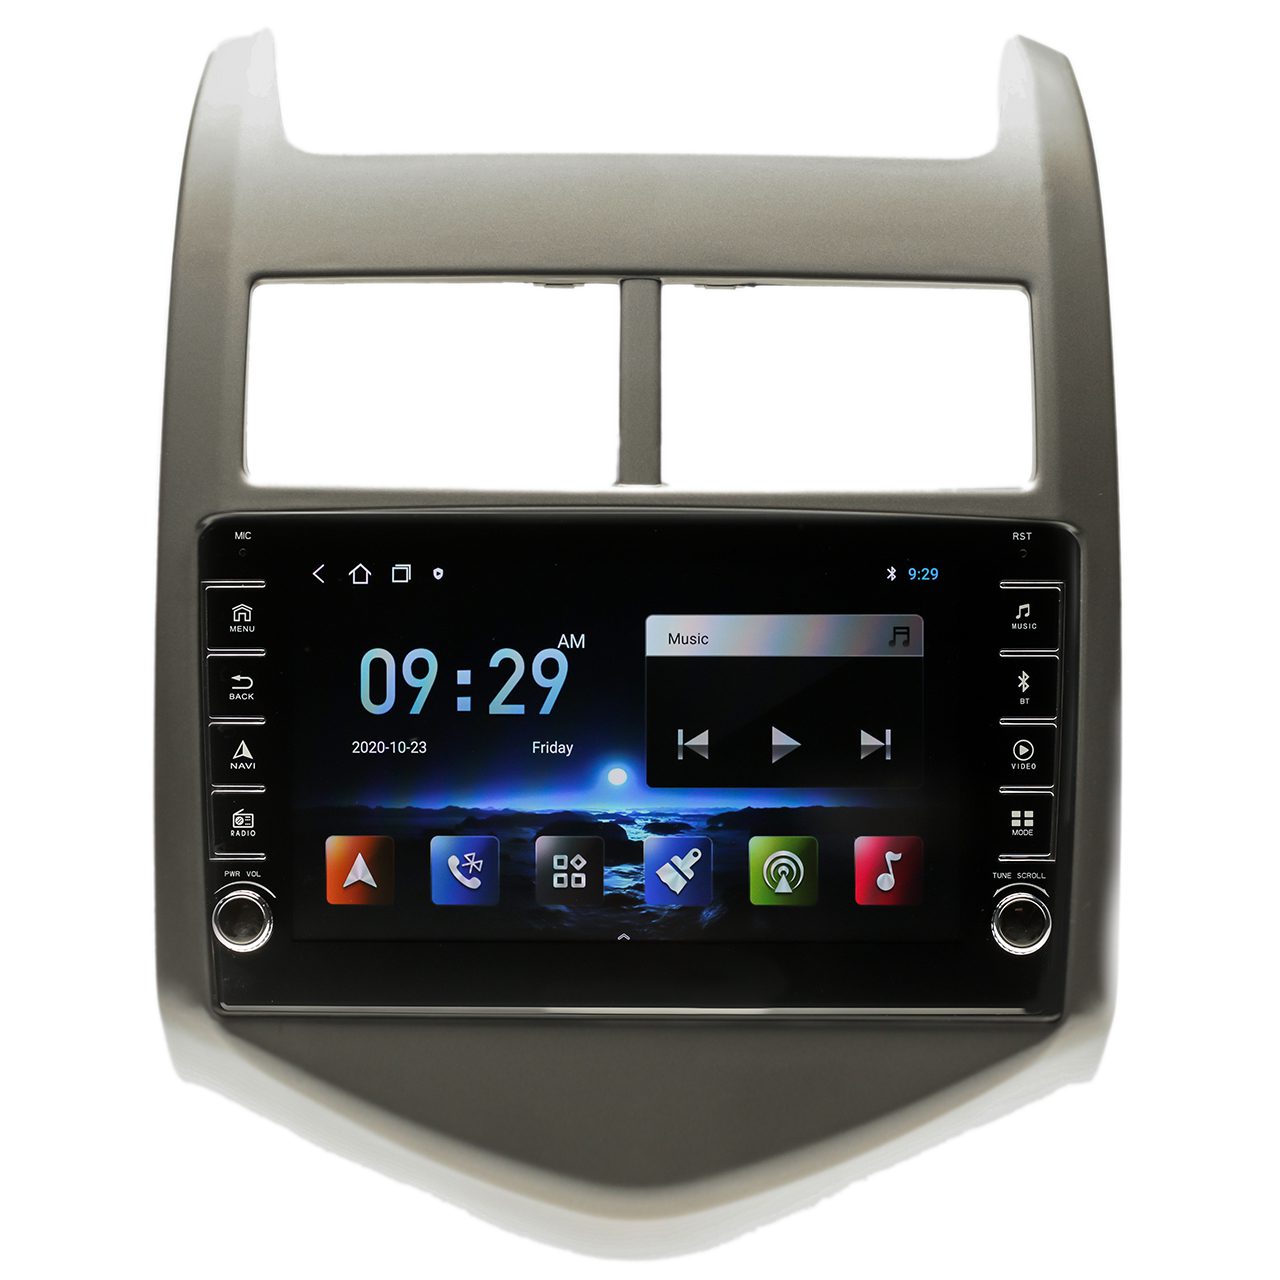 Navigatie AUTONAV Android GPS Dedicata Chevrolet Aveo T300 2011-2015, Model PRO Memorie 64GB Stocare, 4GB DDR3 RAM, Butoane Laterale Si Regulator Volum, Display 8